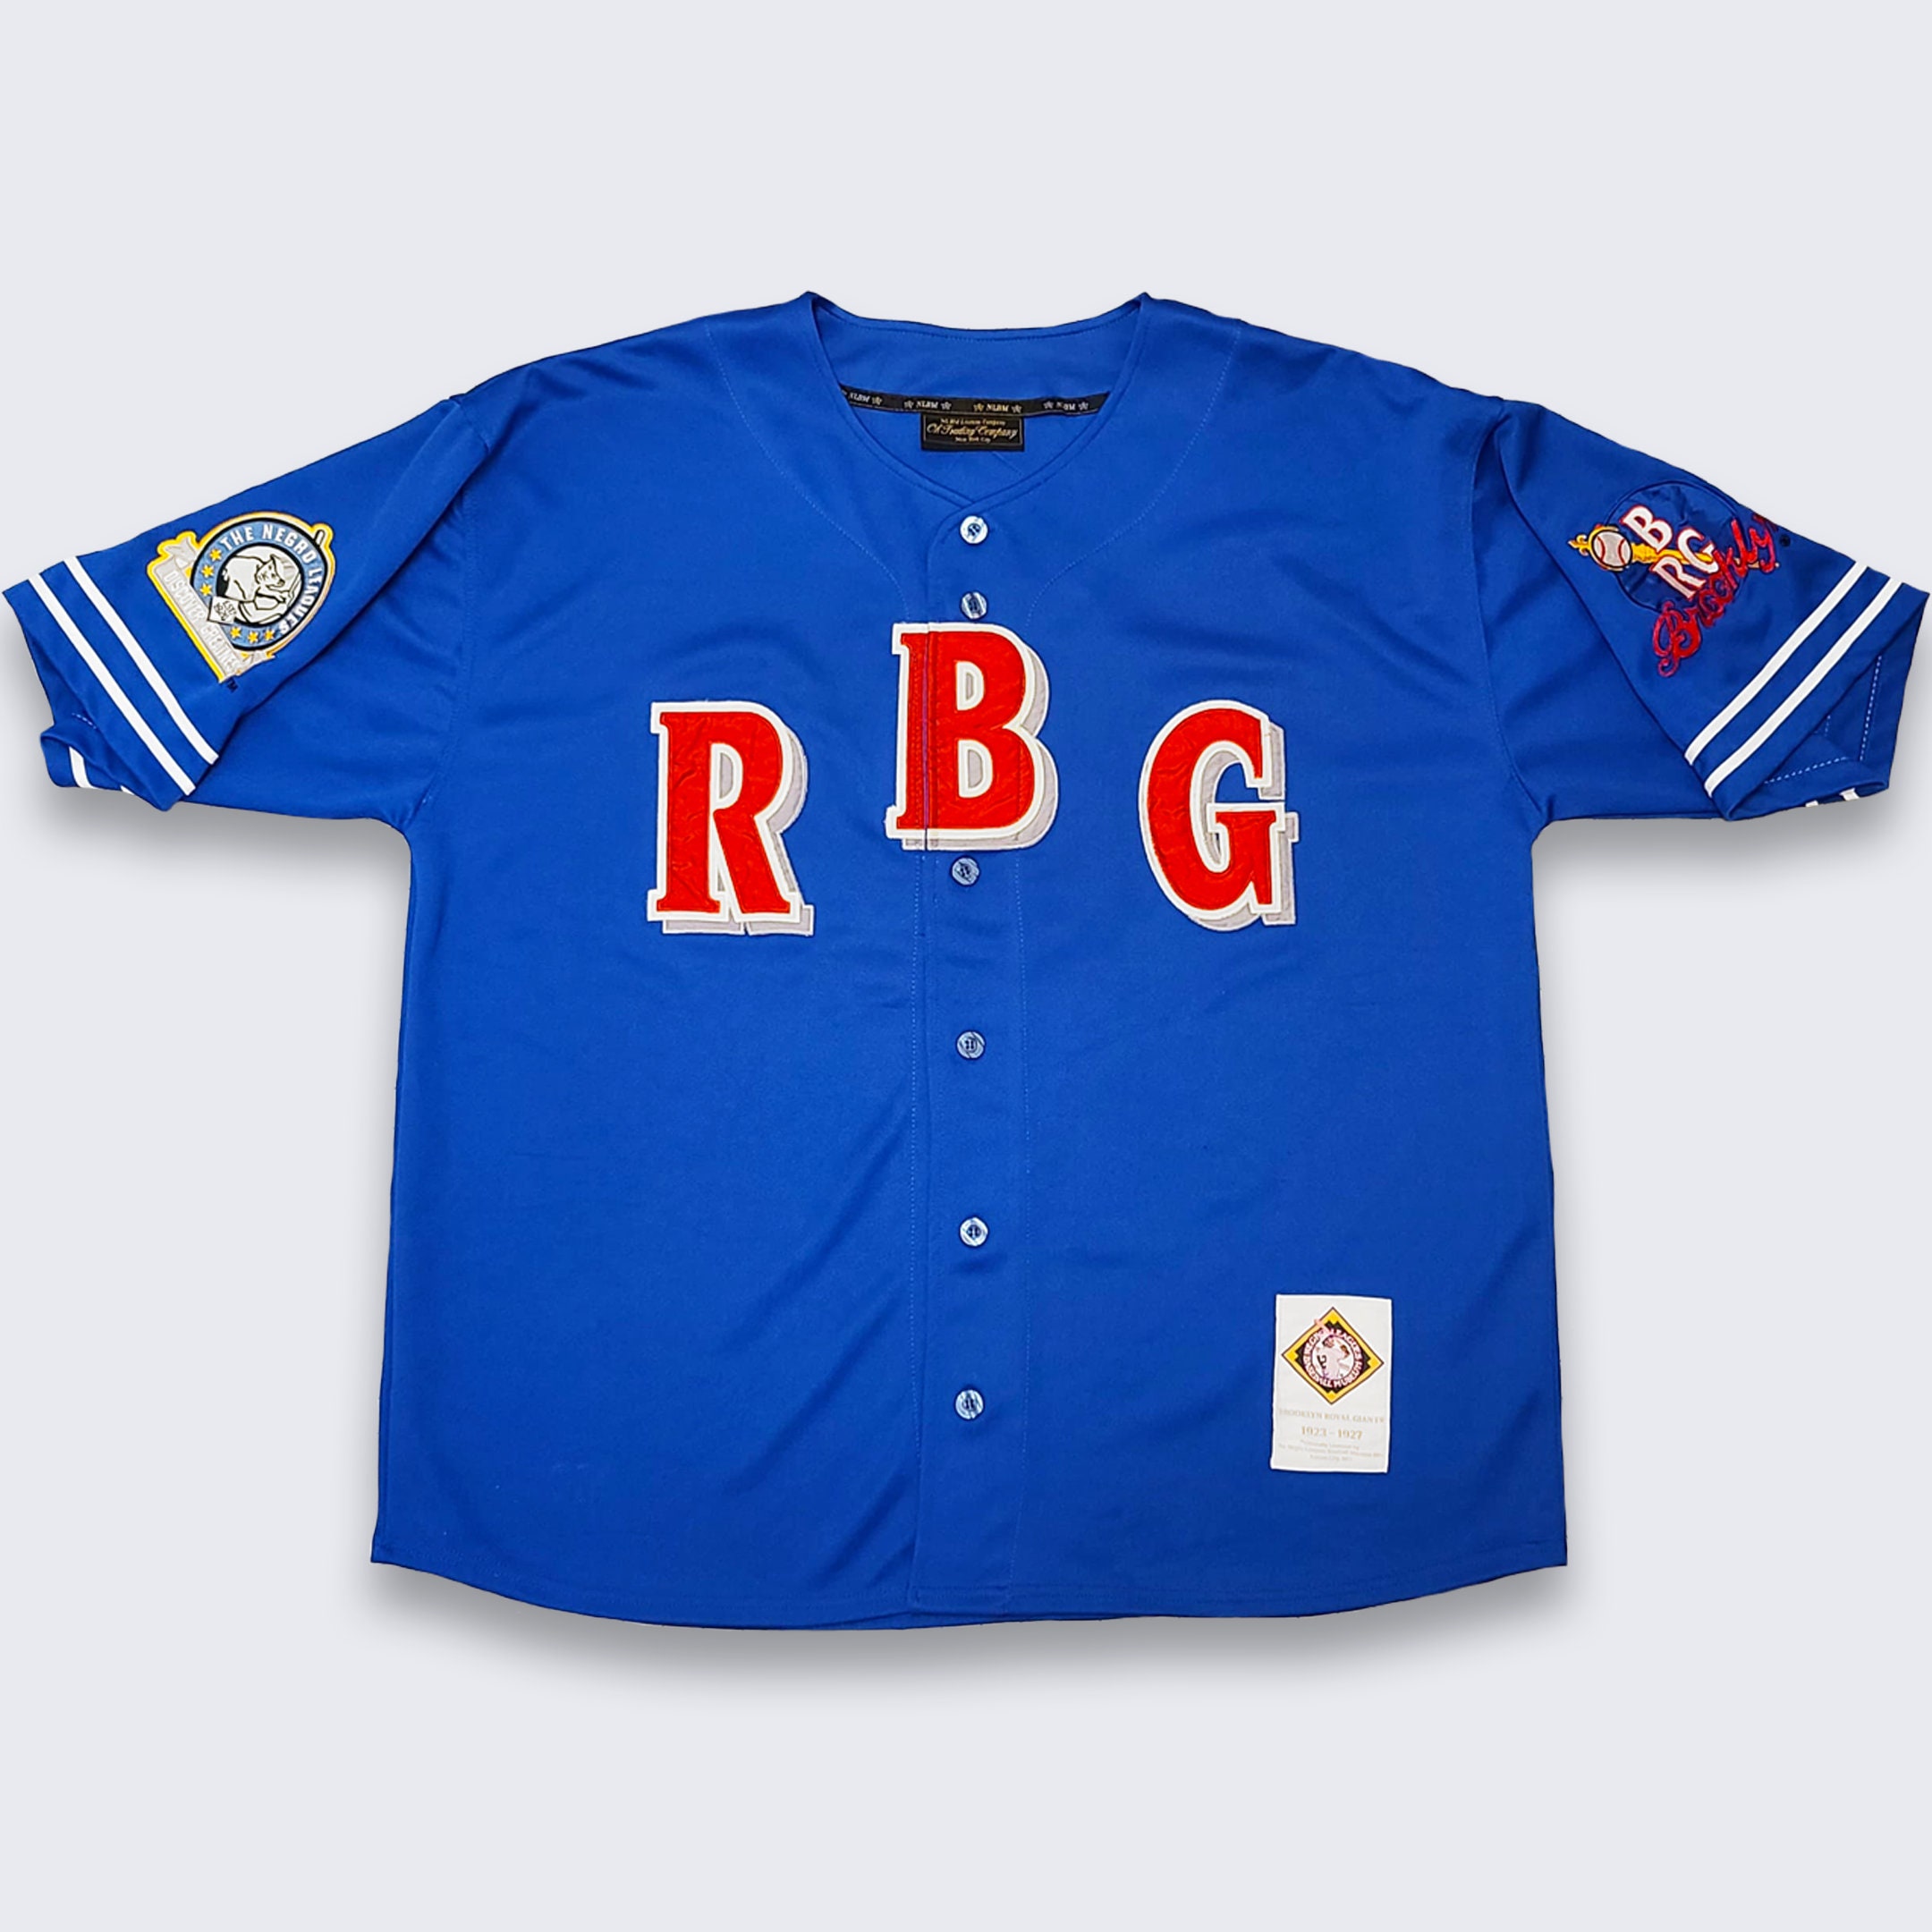 San Diego Brunch Retro League Custom Baseball Jersey (Home) Adult XL